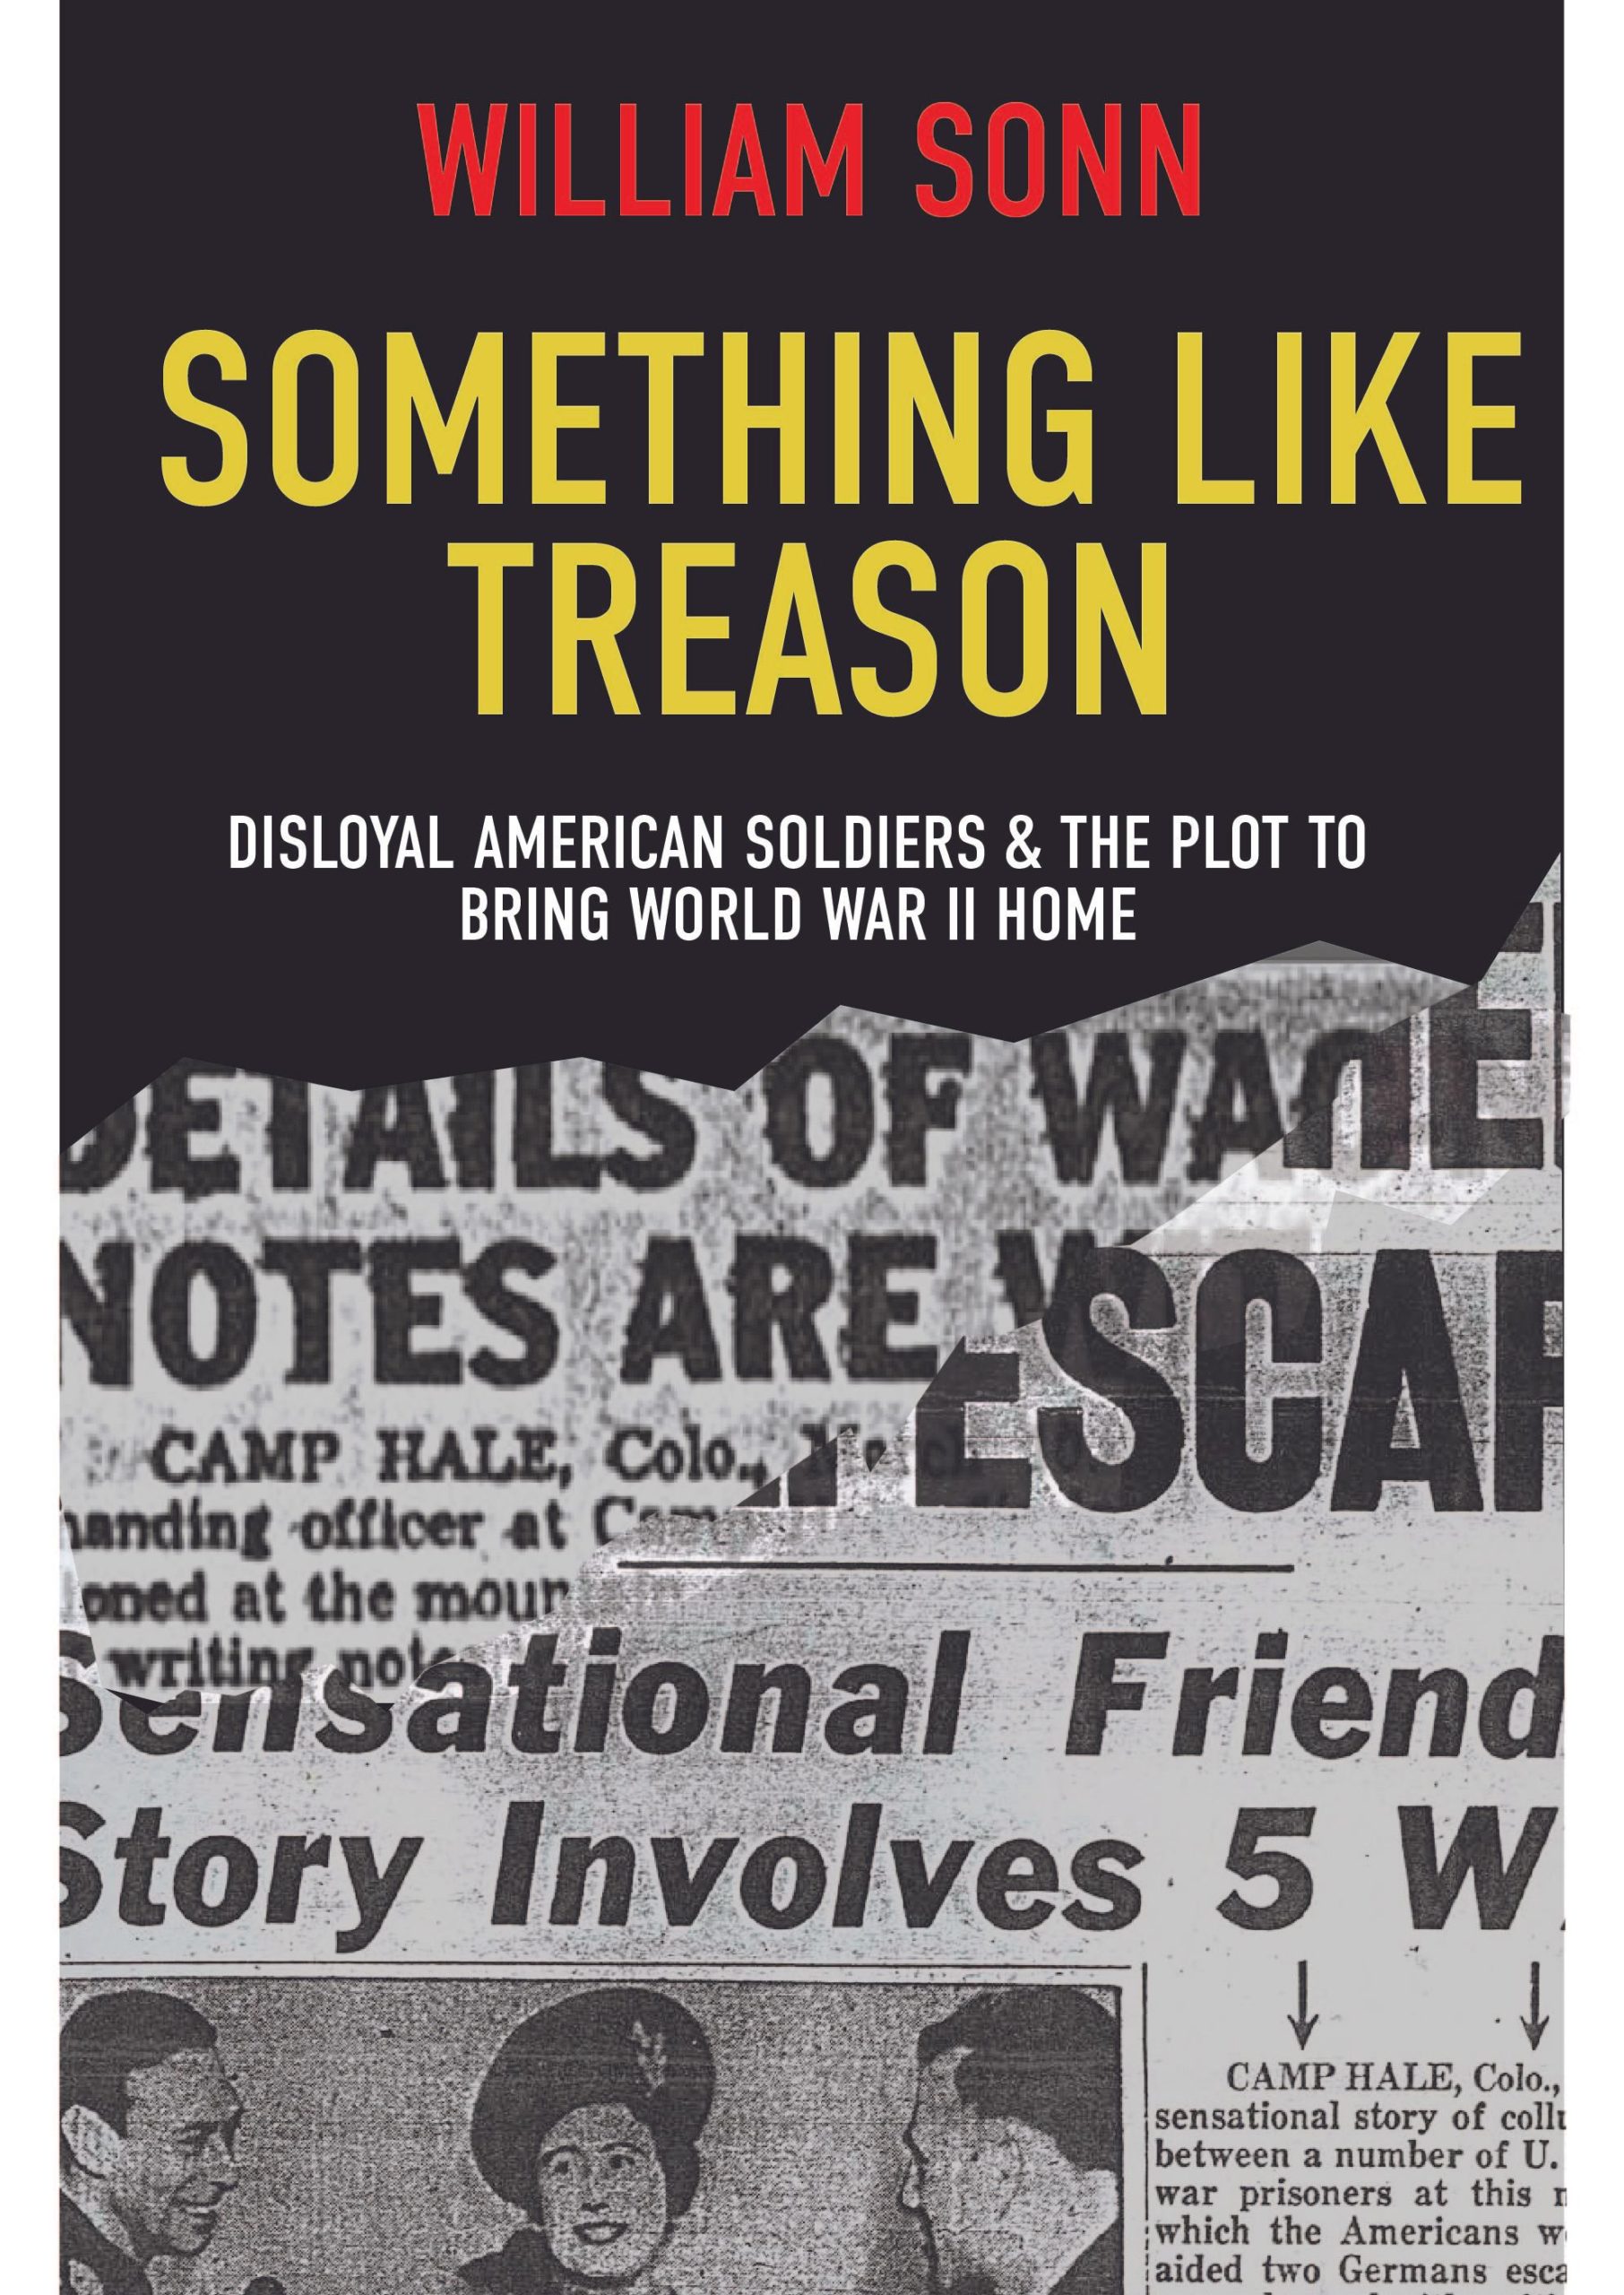 Bill-Sonn-Something-Like-Treason